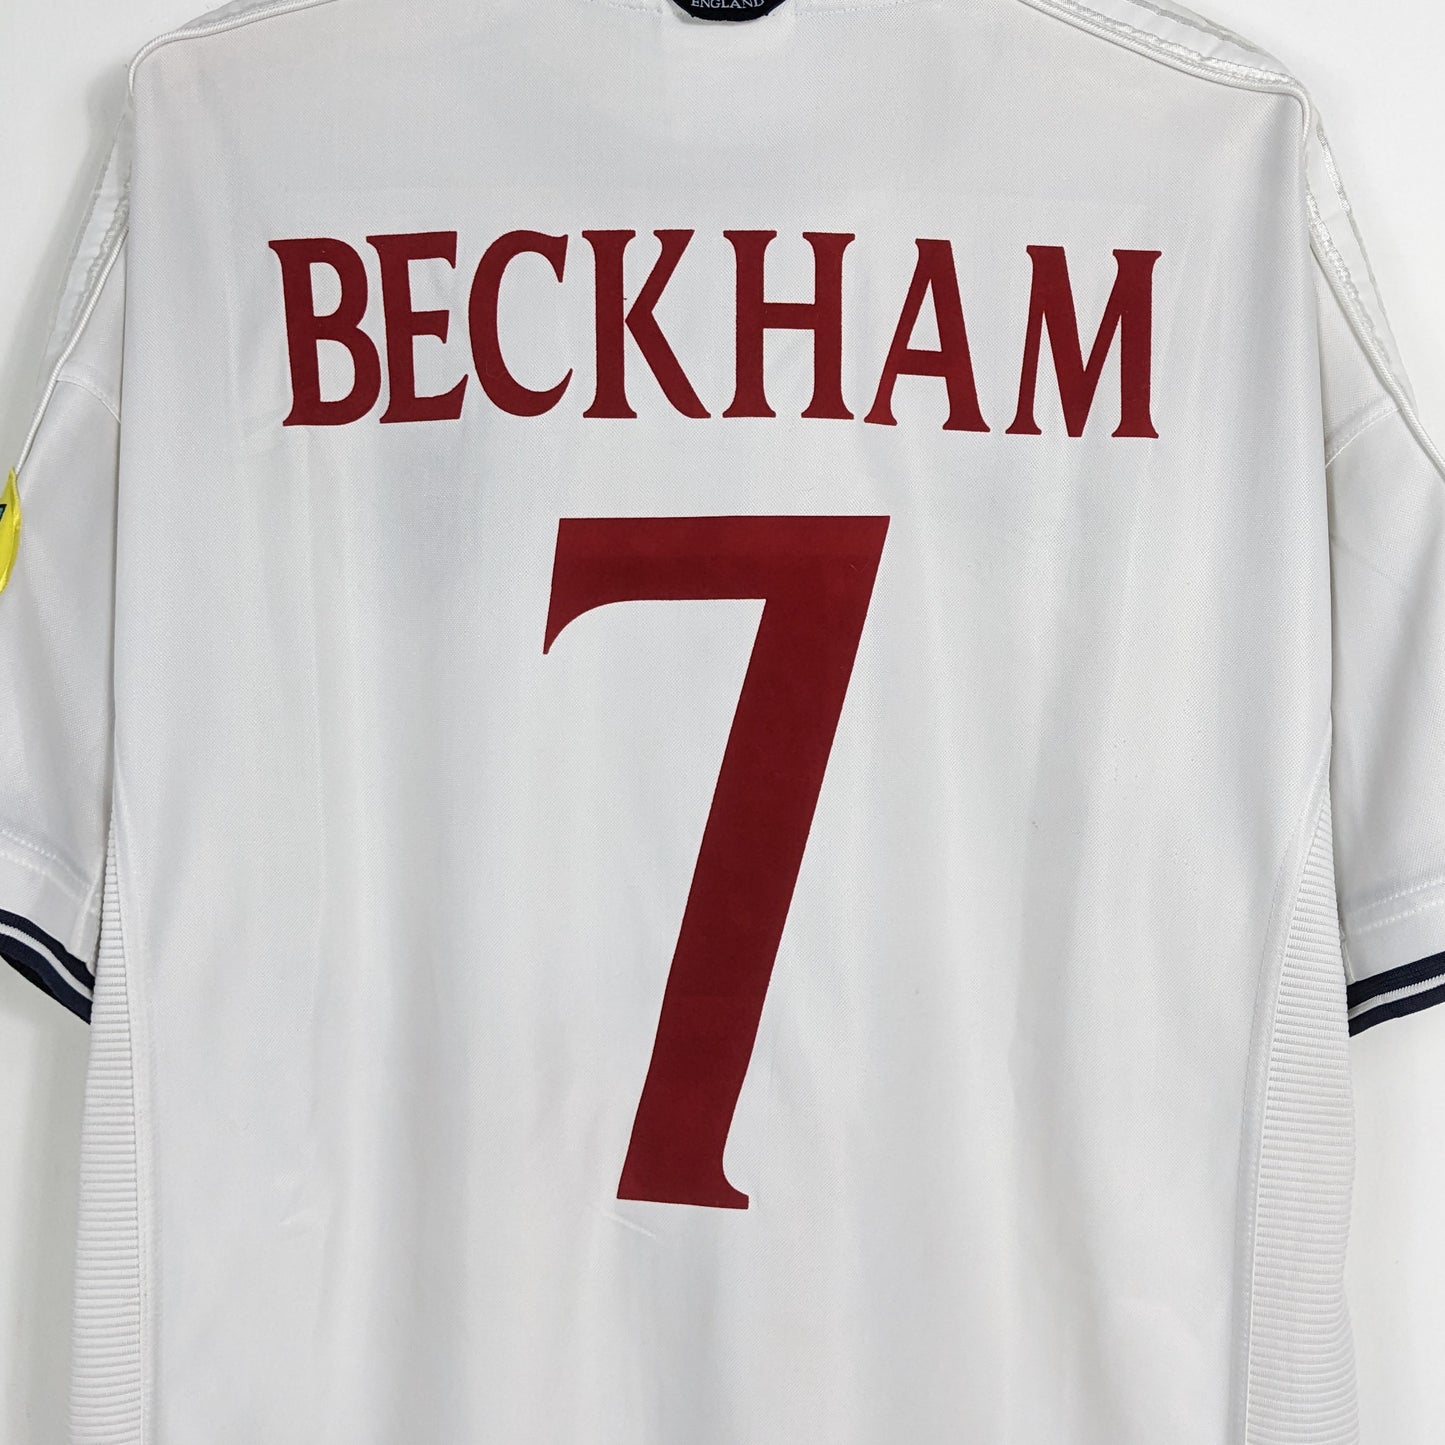 Authentic England 2000 Home - Beckham #7 Size XXL (Euro)